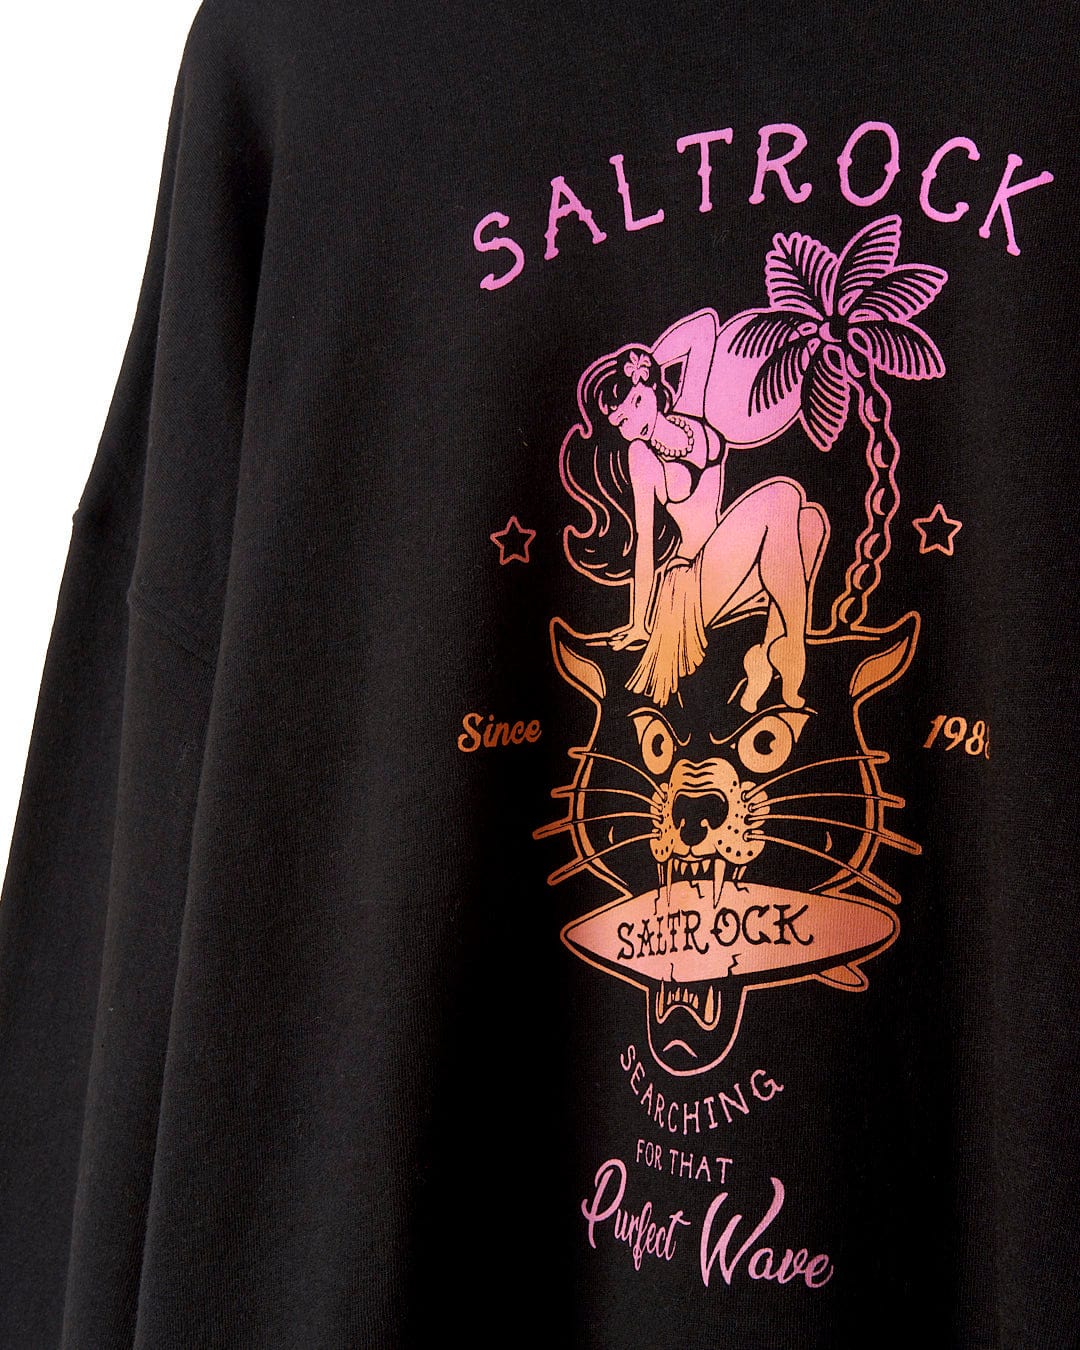 A black sweatshirt with the words Saltrock's Purfect Wave Gradient - Womens Boyfriend Fit Sweat - Black on it.